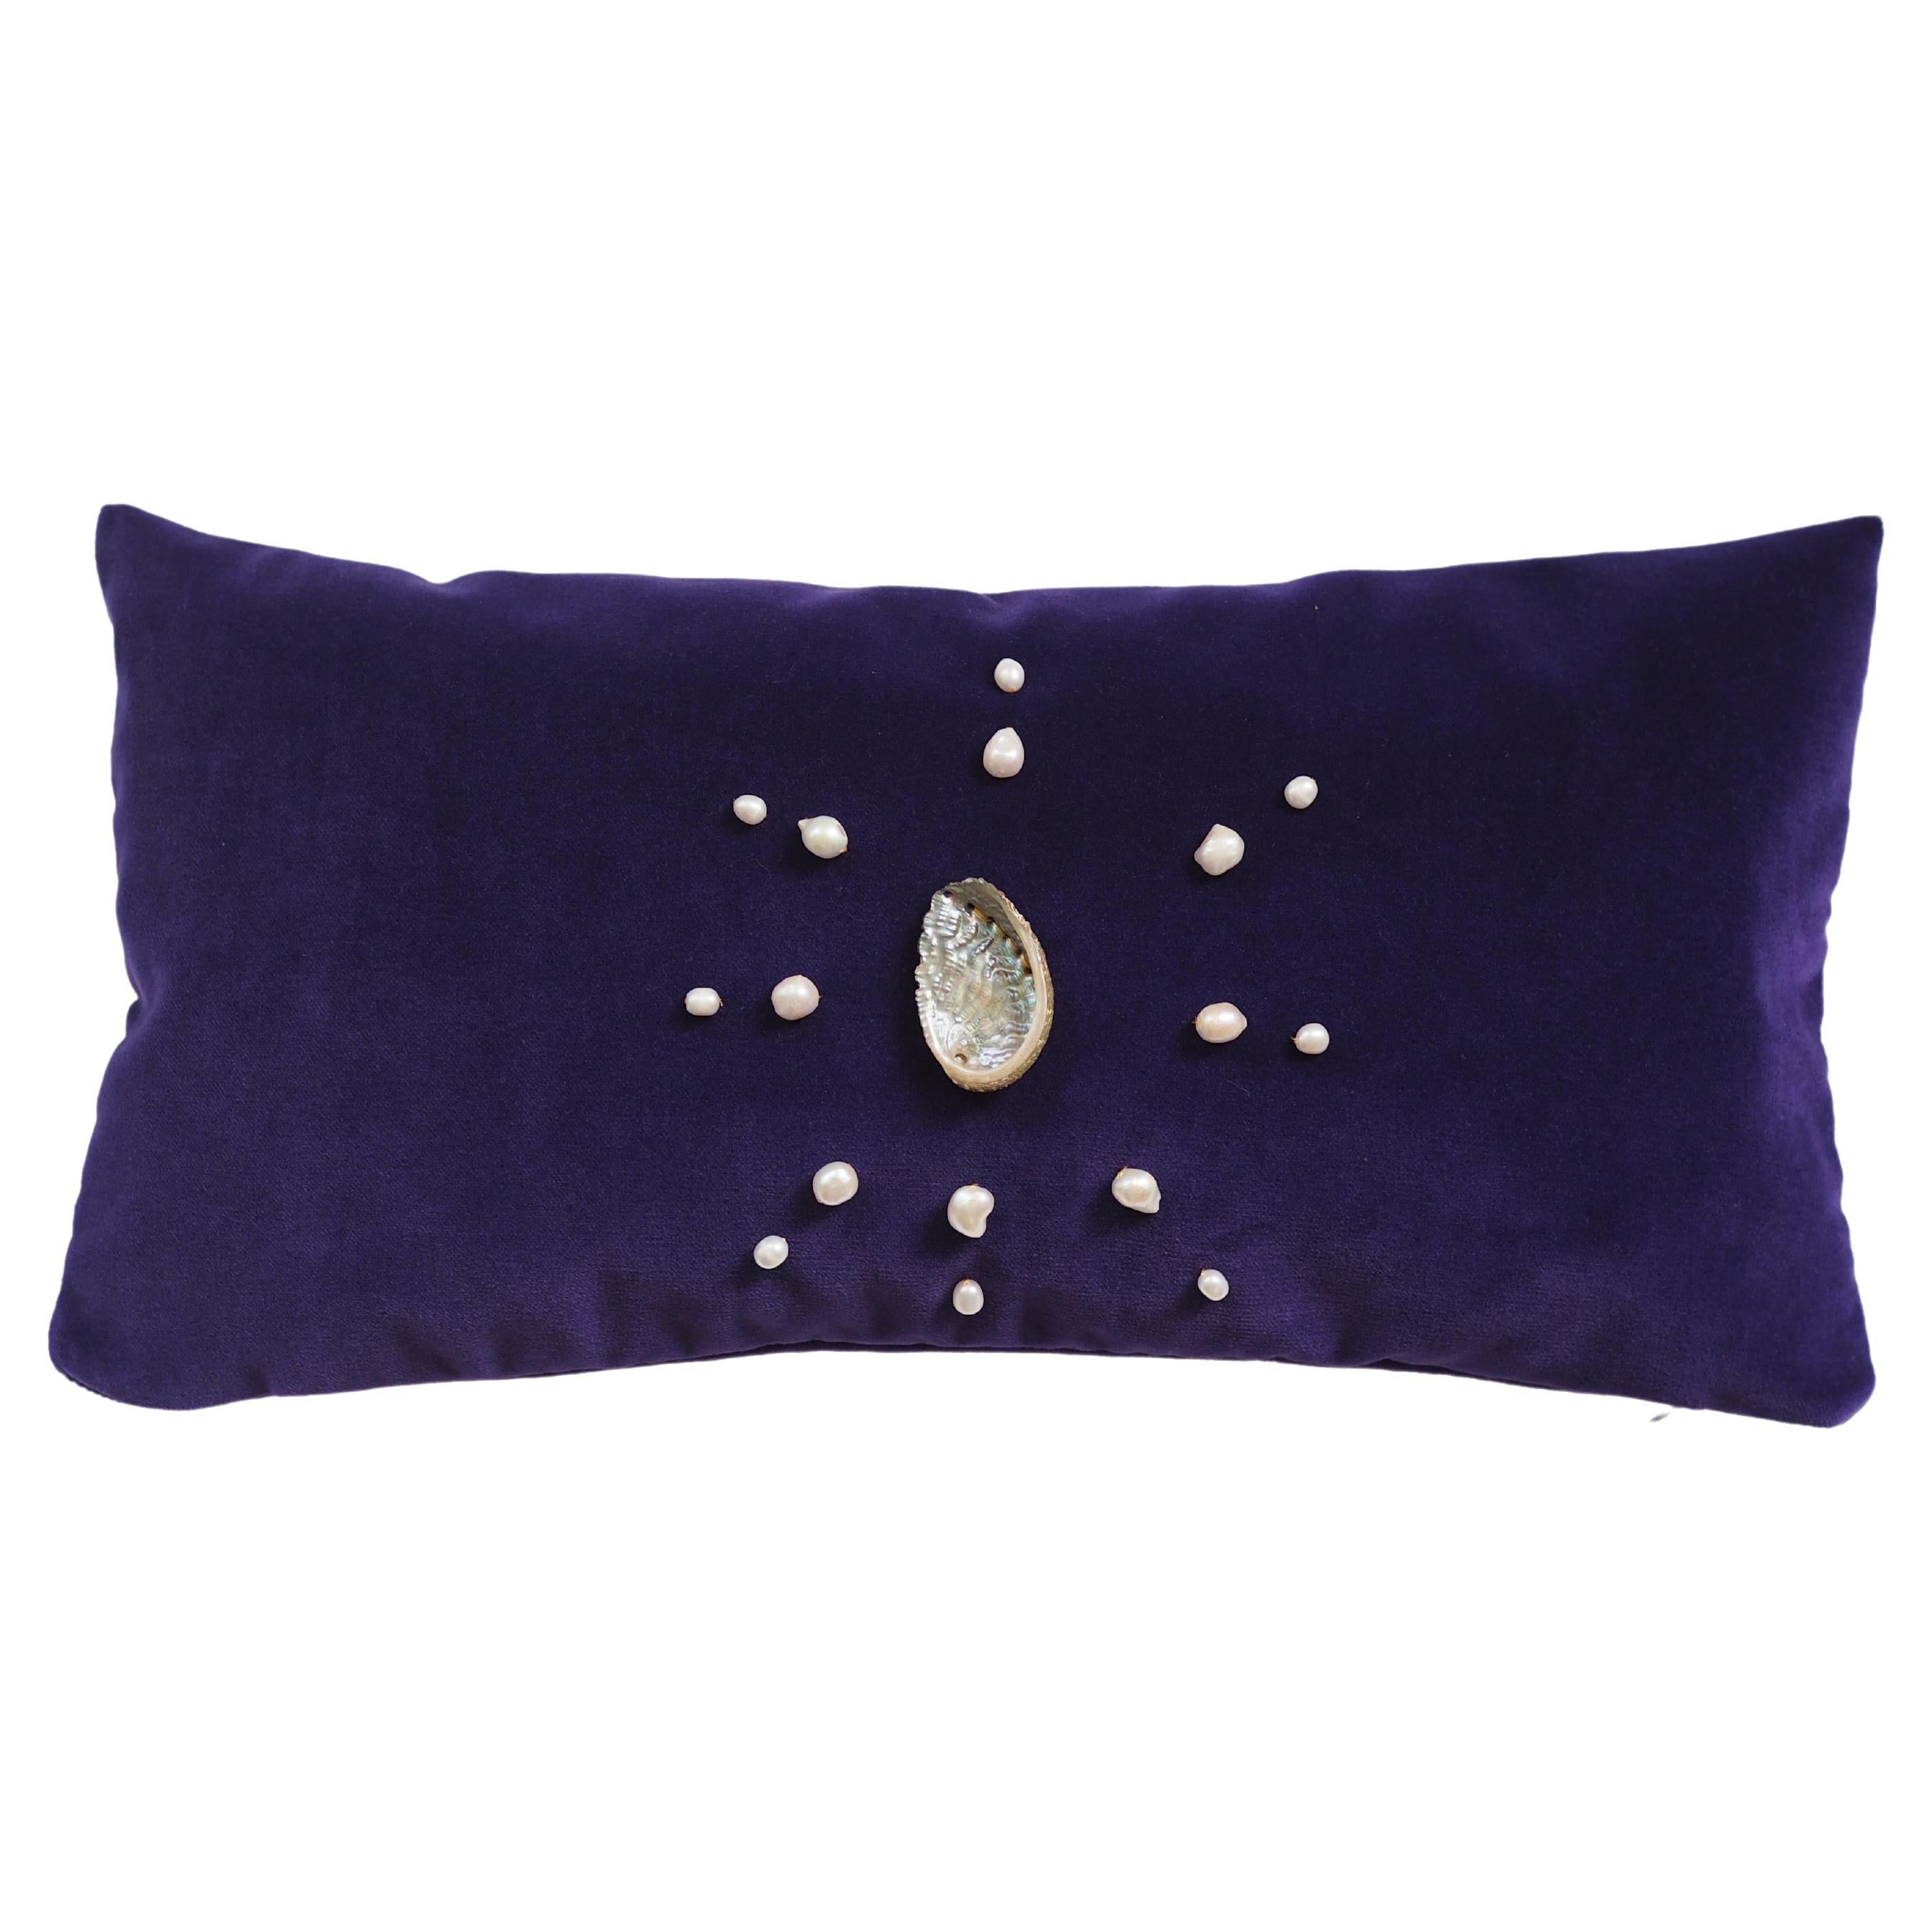 Bon Appetit 012 Decorative Cushion Culto Ponsoda 21st century desingn For Sale